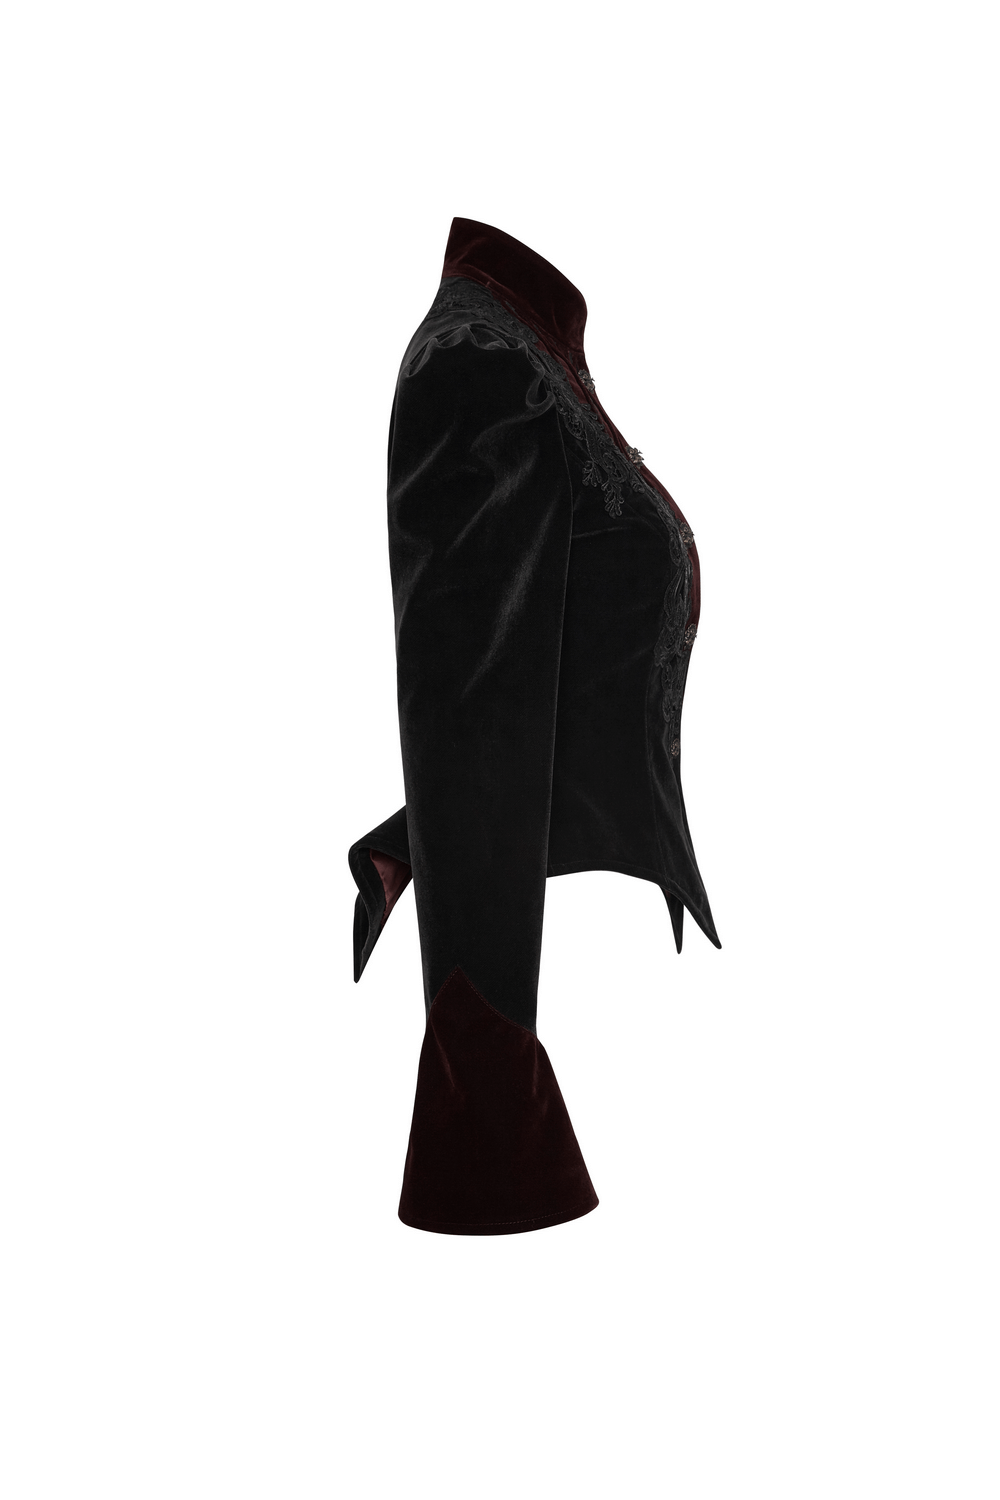 Elegant Embroidered Velvet Gothic Tailcoat Jacket - HARD'N'HEAVY